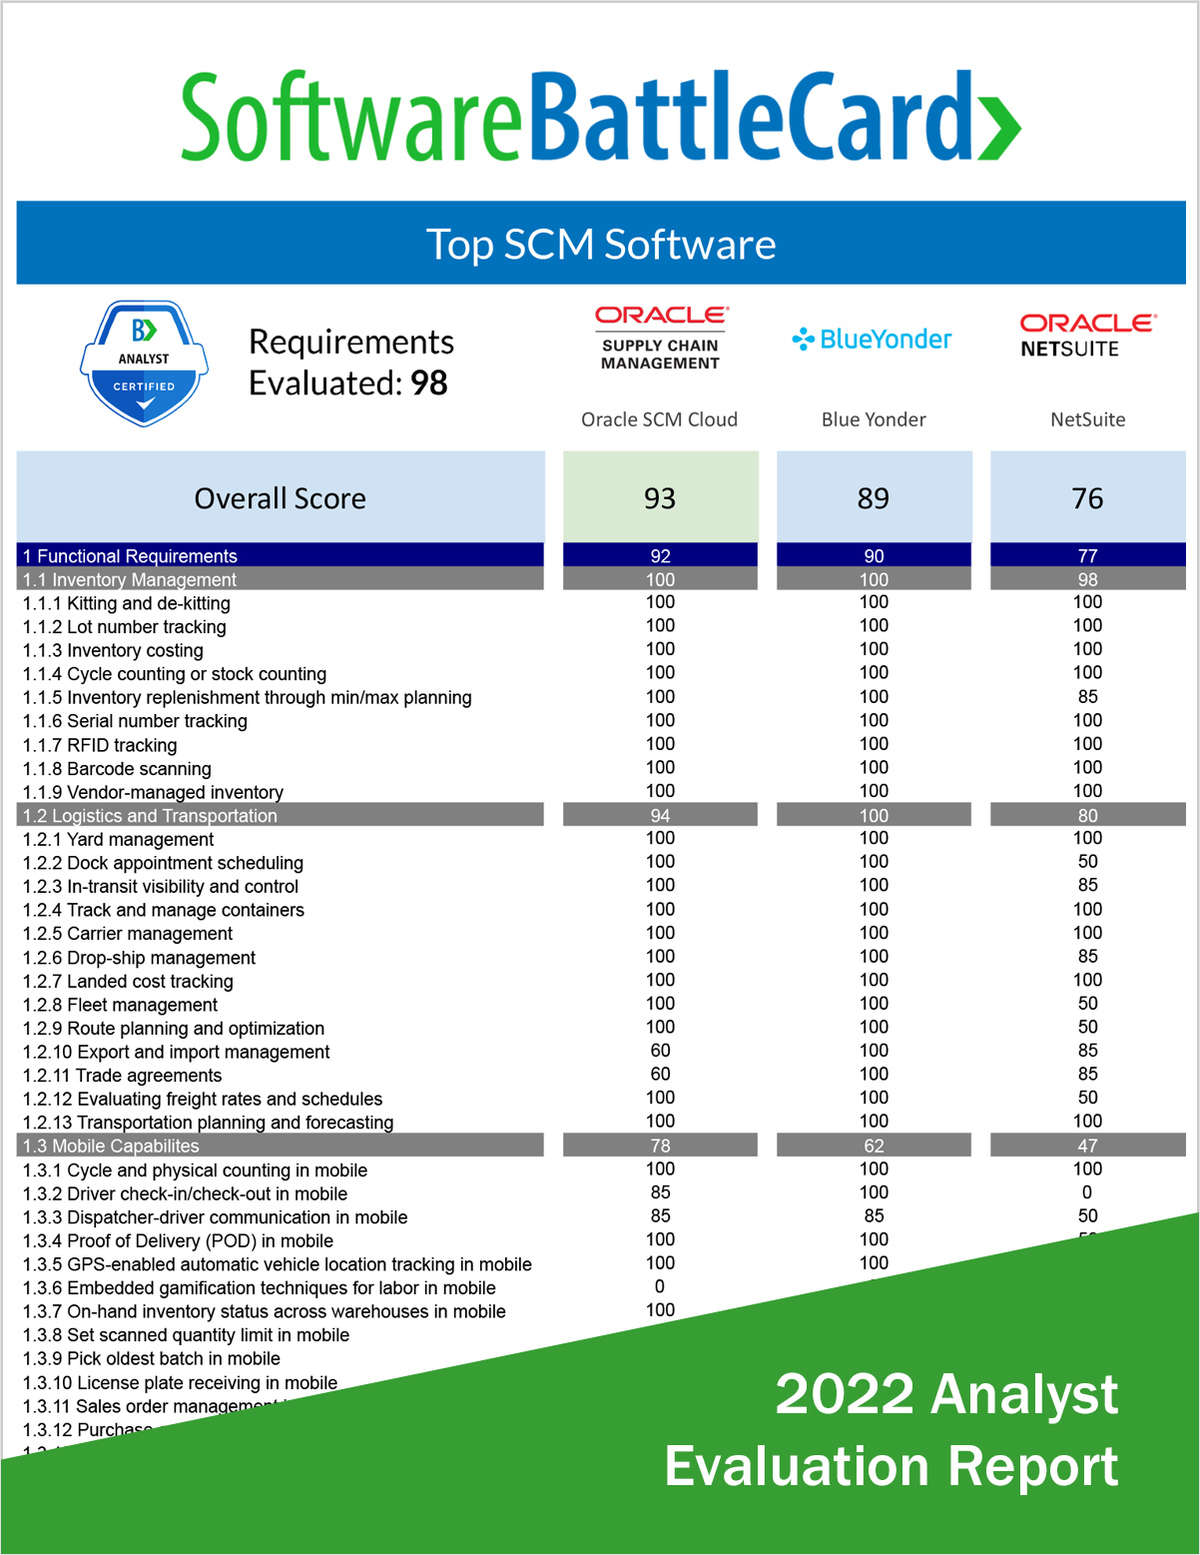 Top Supply Chain Management (SCM) Software--Oracle SCM Cloud vs. Blue Yonder vs. Oracle NetSuite